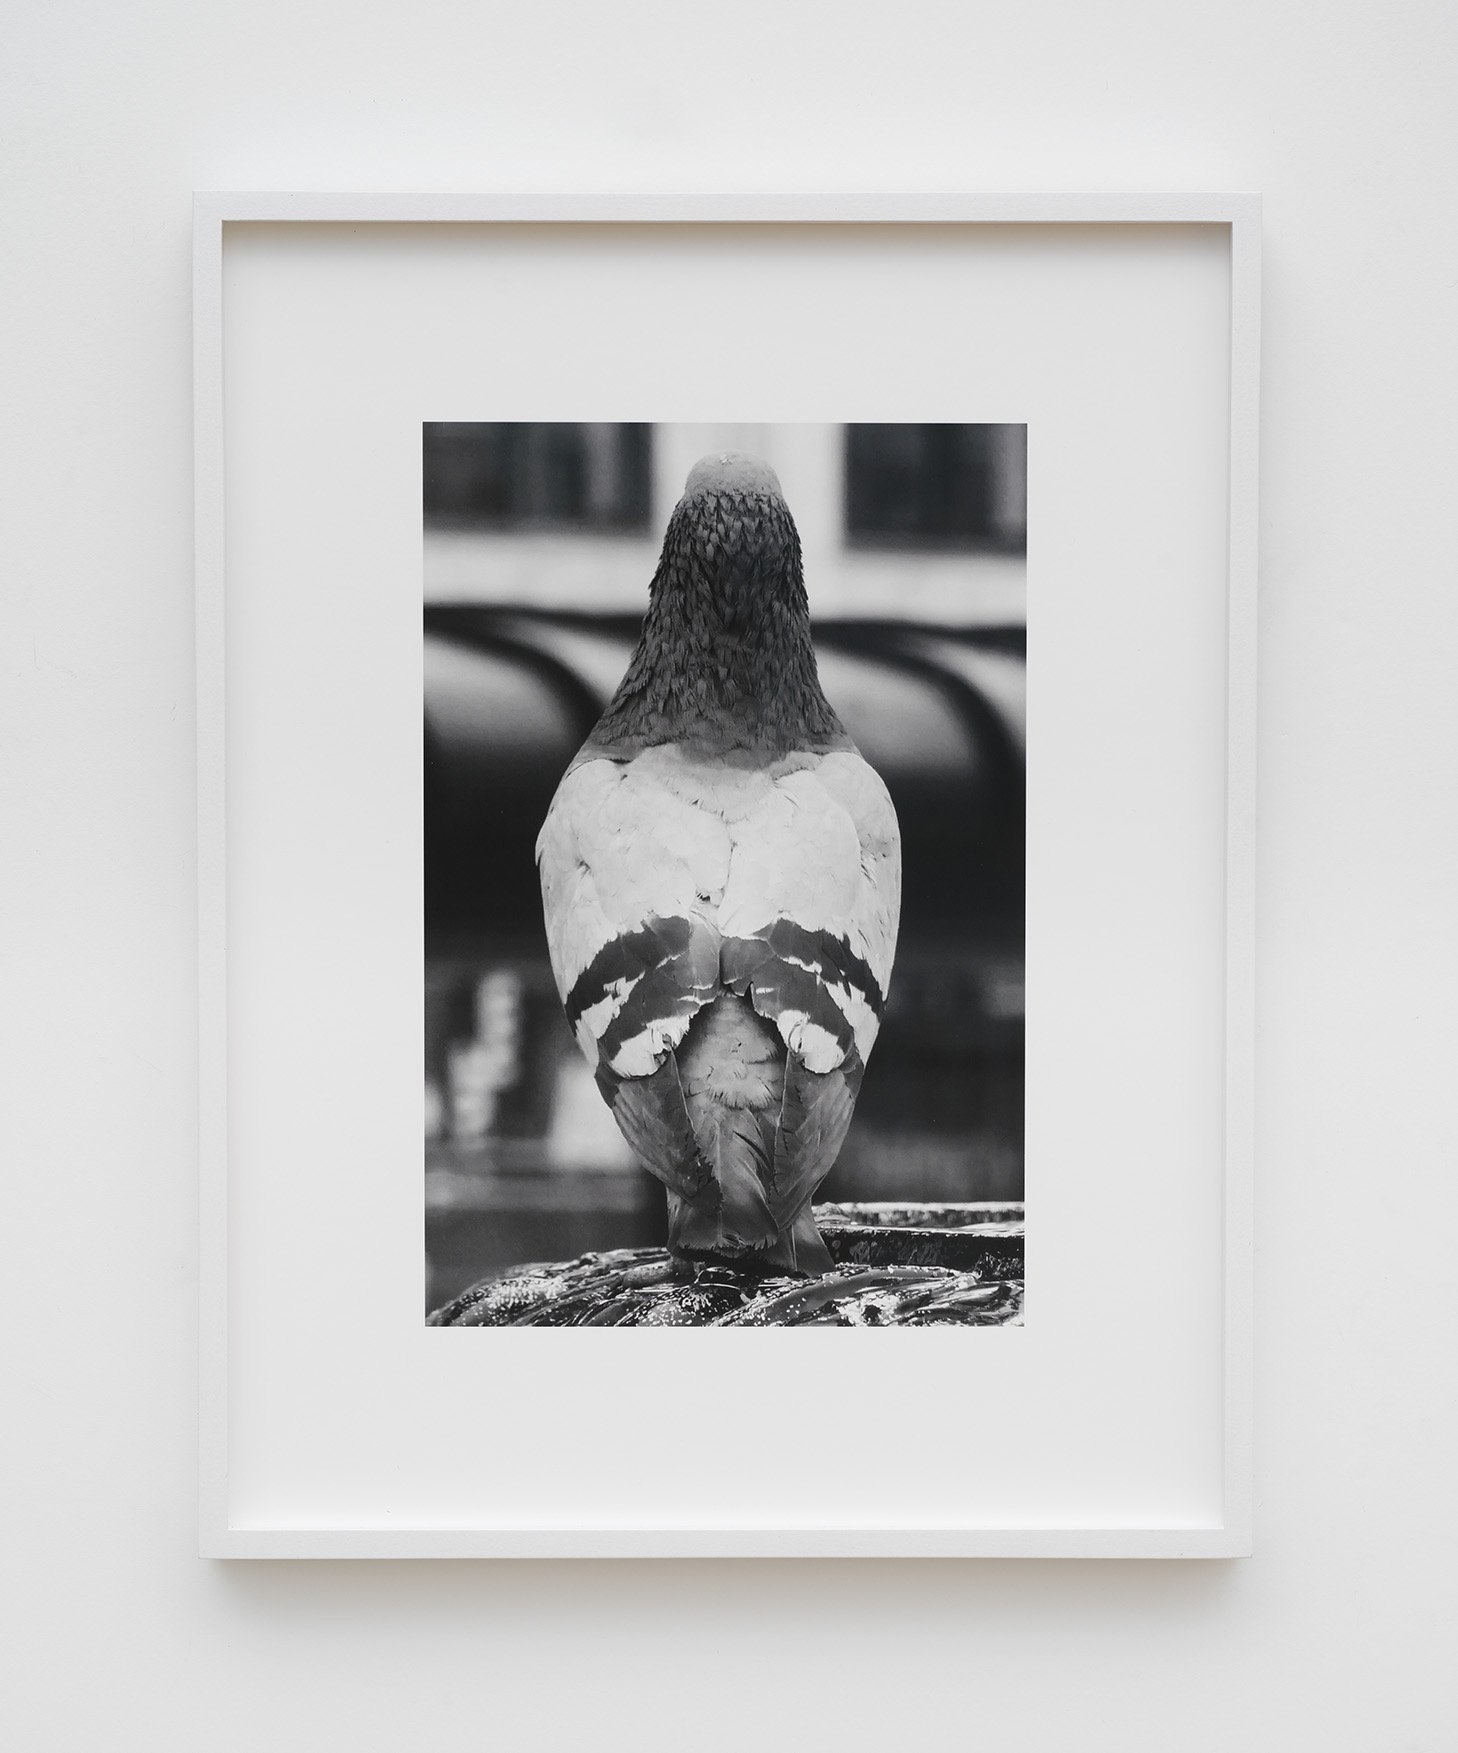  pigeon 2022  24 x 16 cm, archival pigment print on cotton rag (ed. of 3 + 1 ap) 